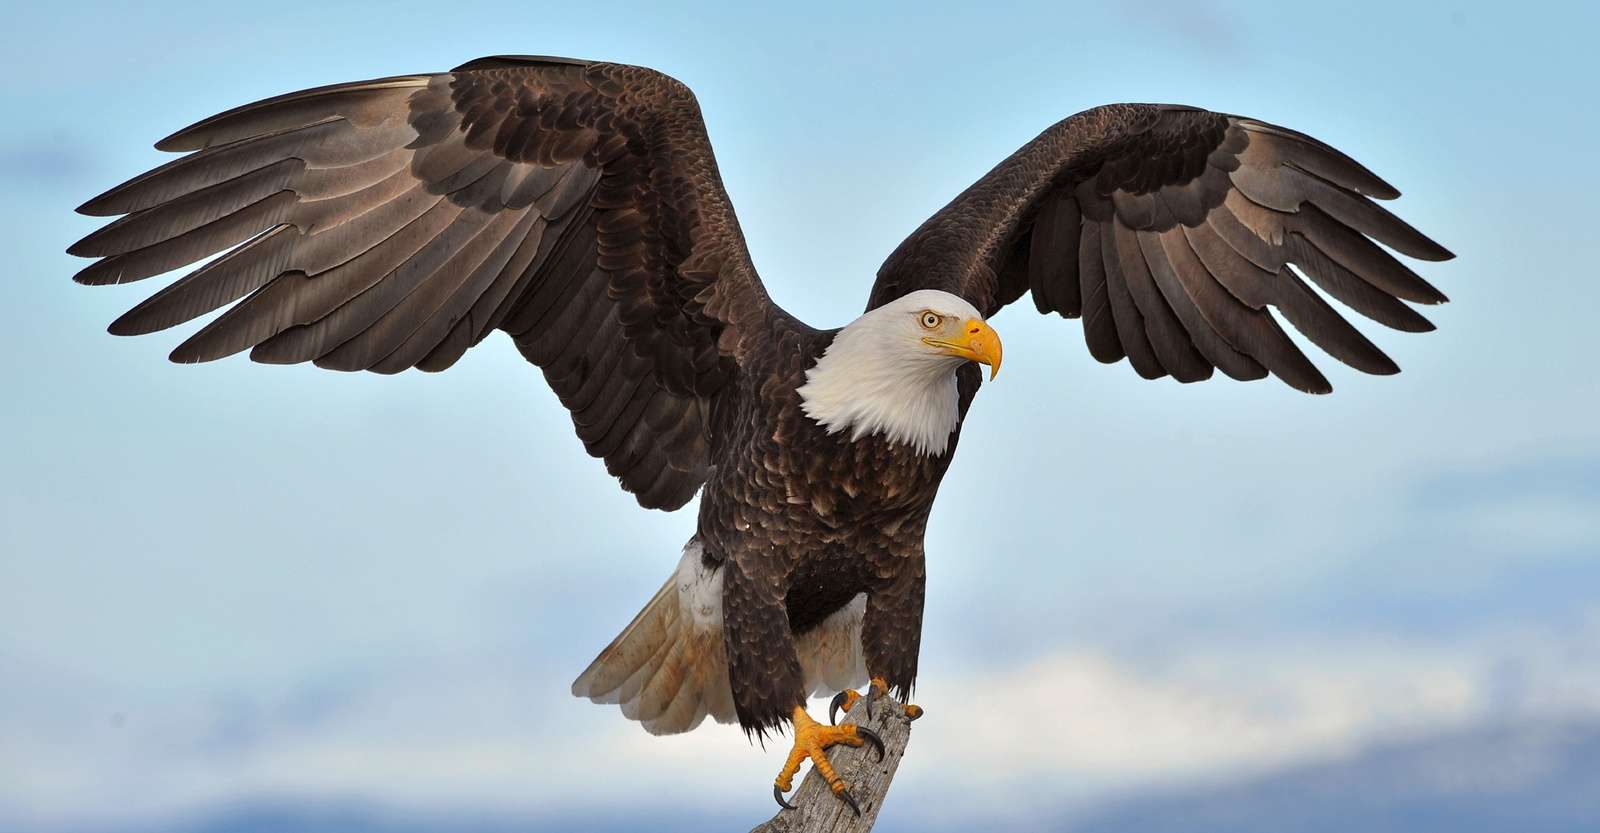 Bald eagle, Yellowstone National Park, Wyoming.